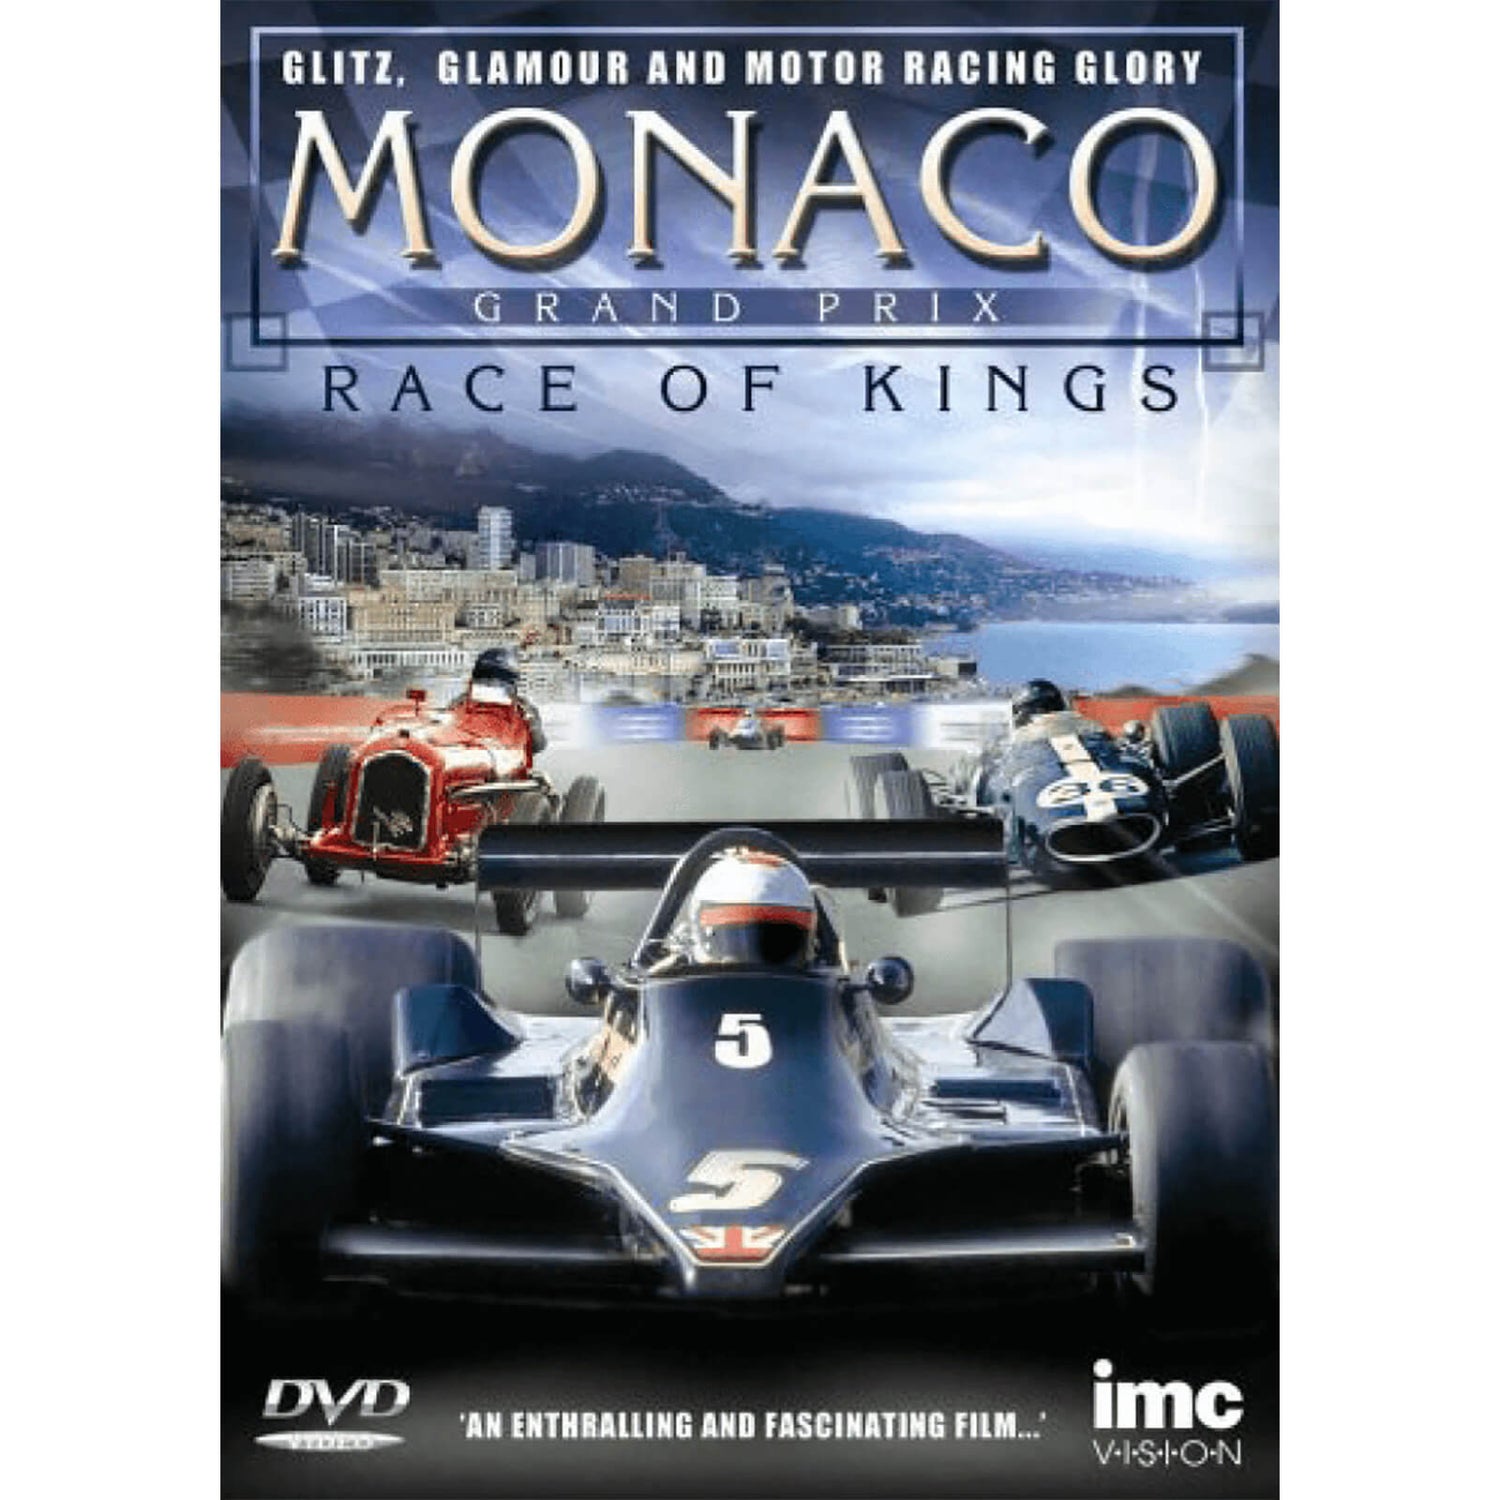 The Monaco Grand Prix - Race Of Kings